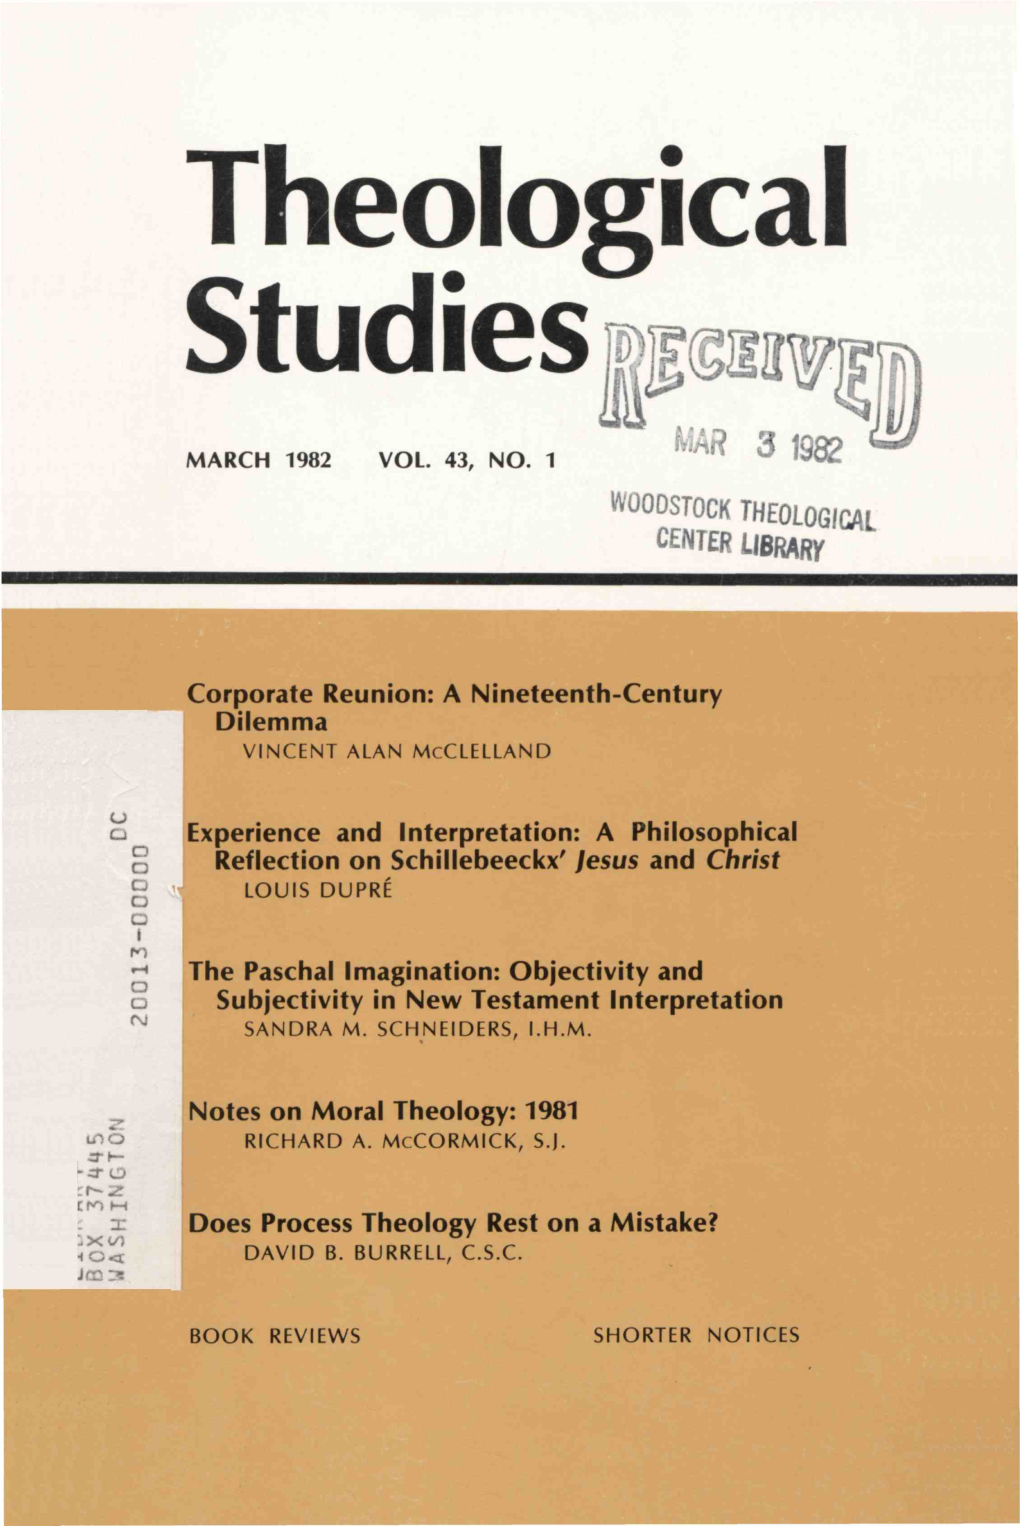 Theological Studies Ι?«!«! Iqí» MJ MARCH 1982 VOL